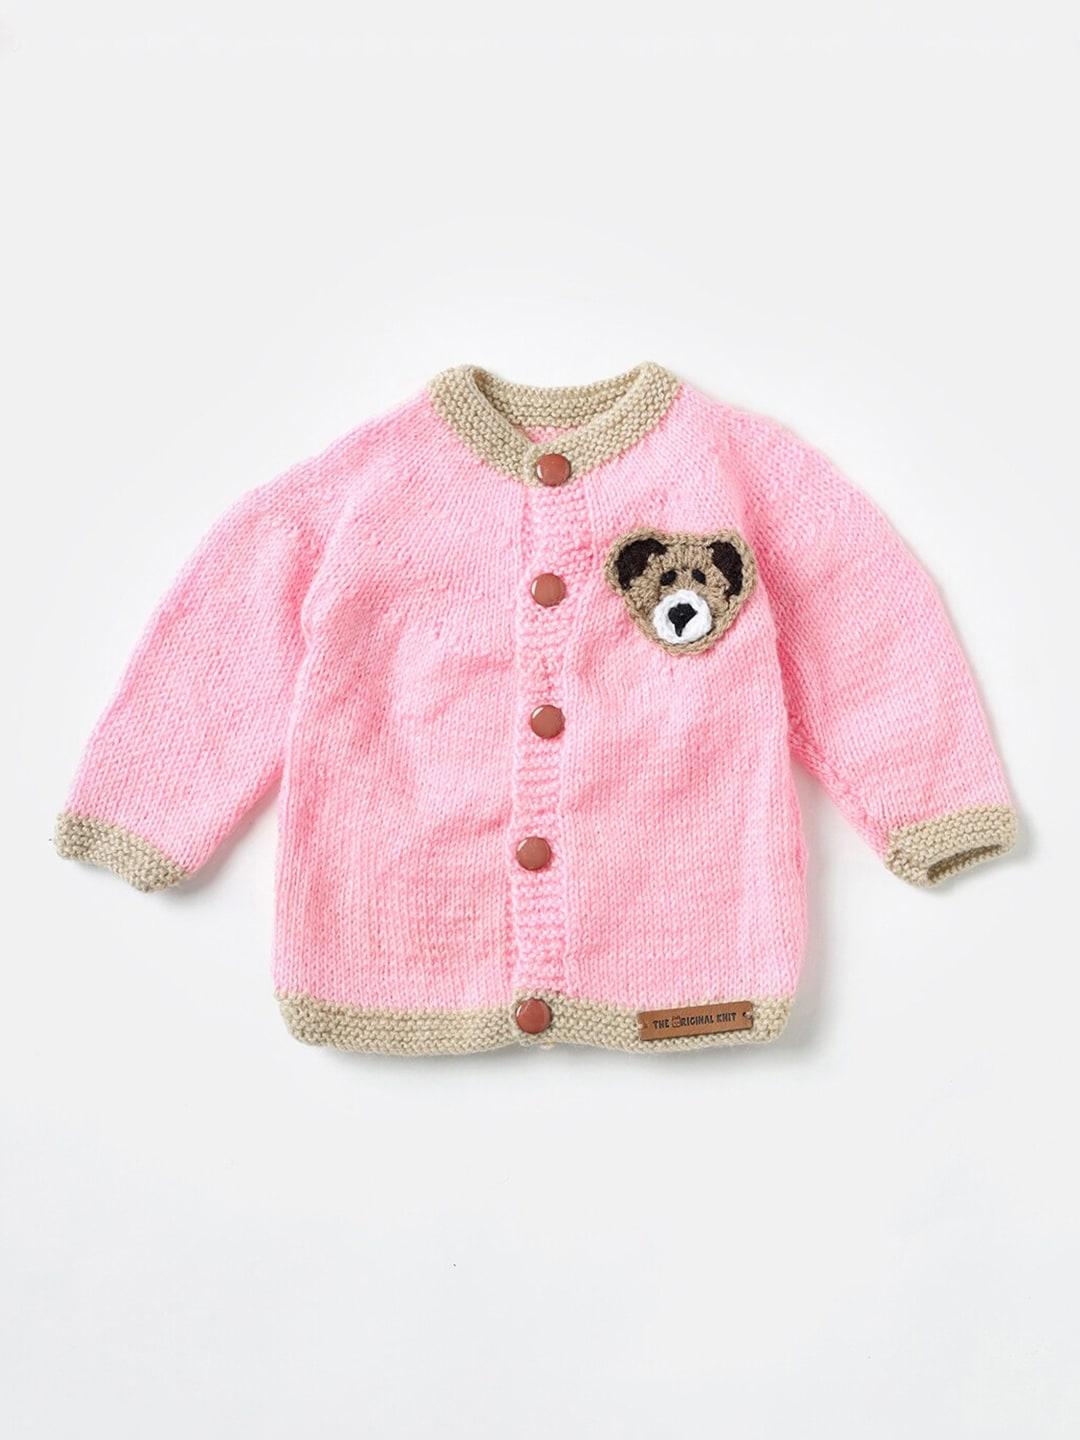 the-original-knit-infant-kids-cardigan-sweater